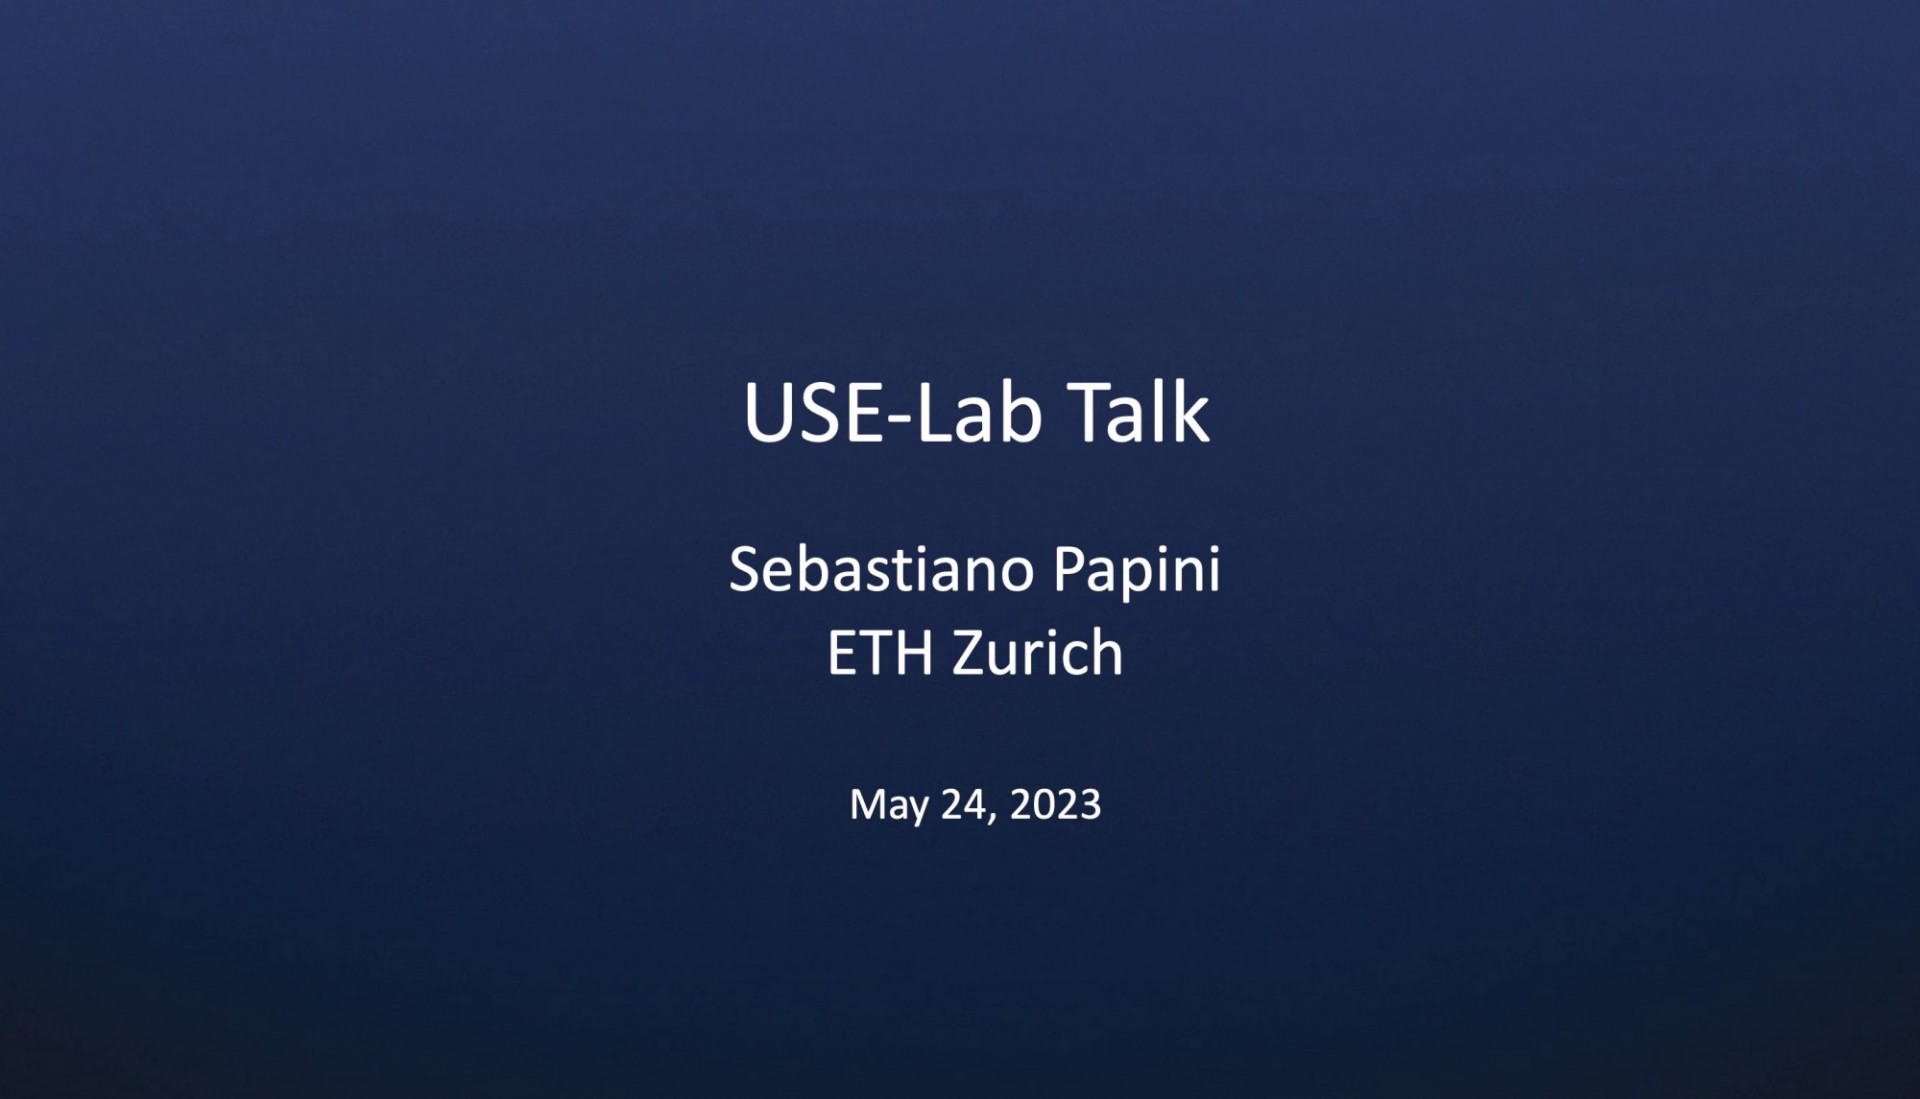 USE-Lab Talk Flyer